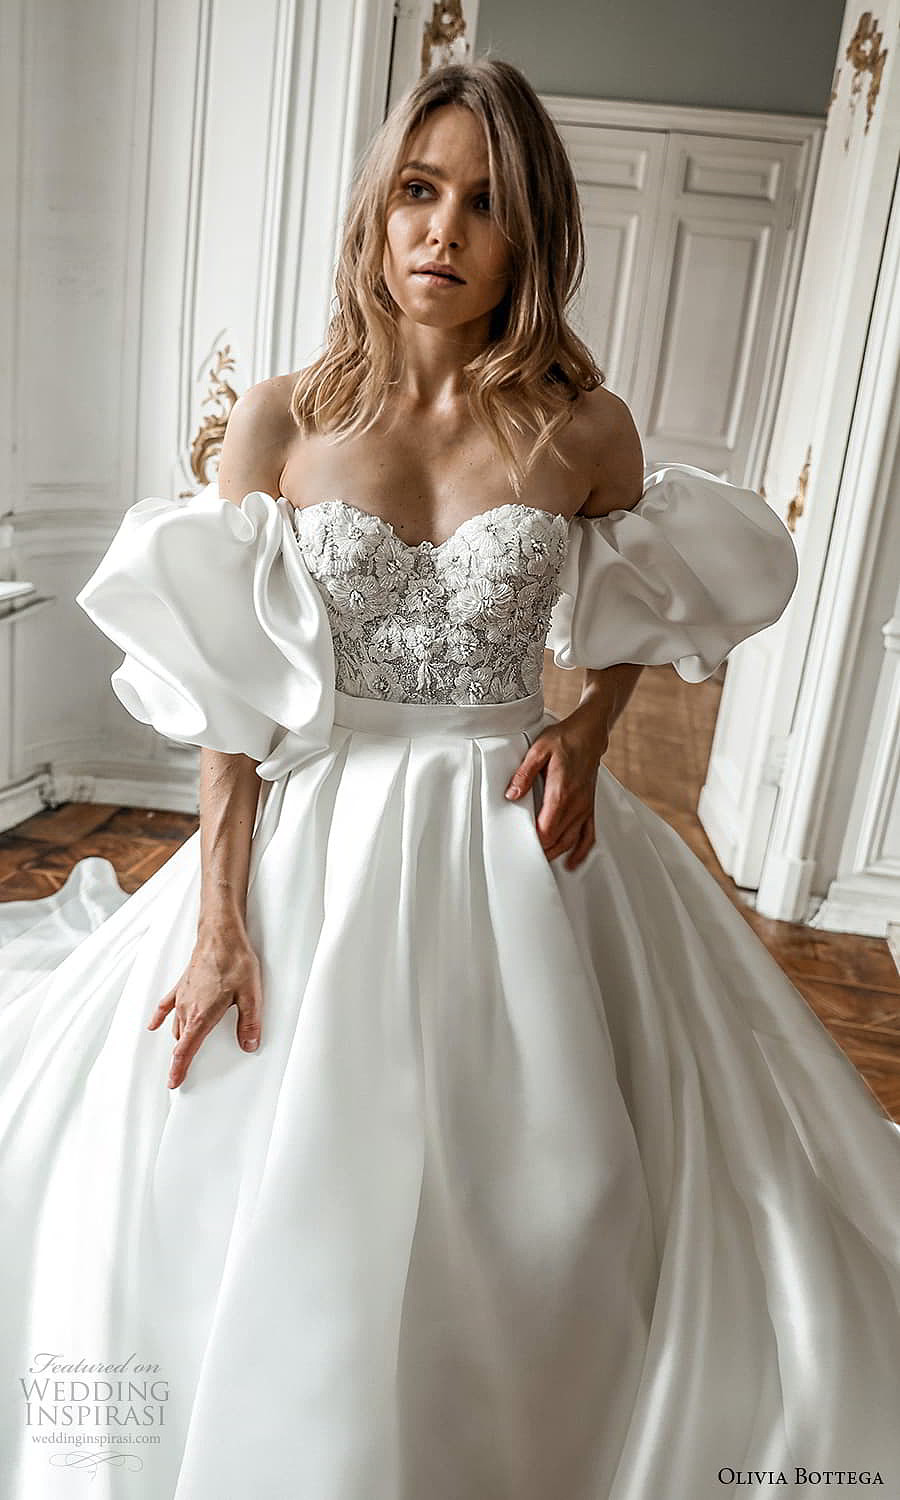 Olivia Bottega Pret-a-Porter 新娘系列 优雅百搭新娘嫁衣 - 25